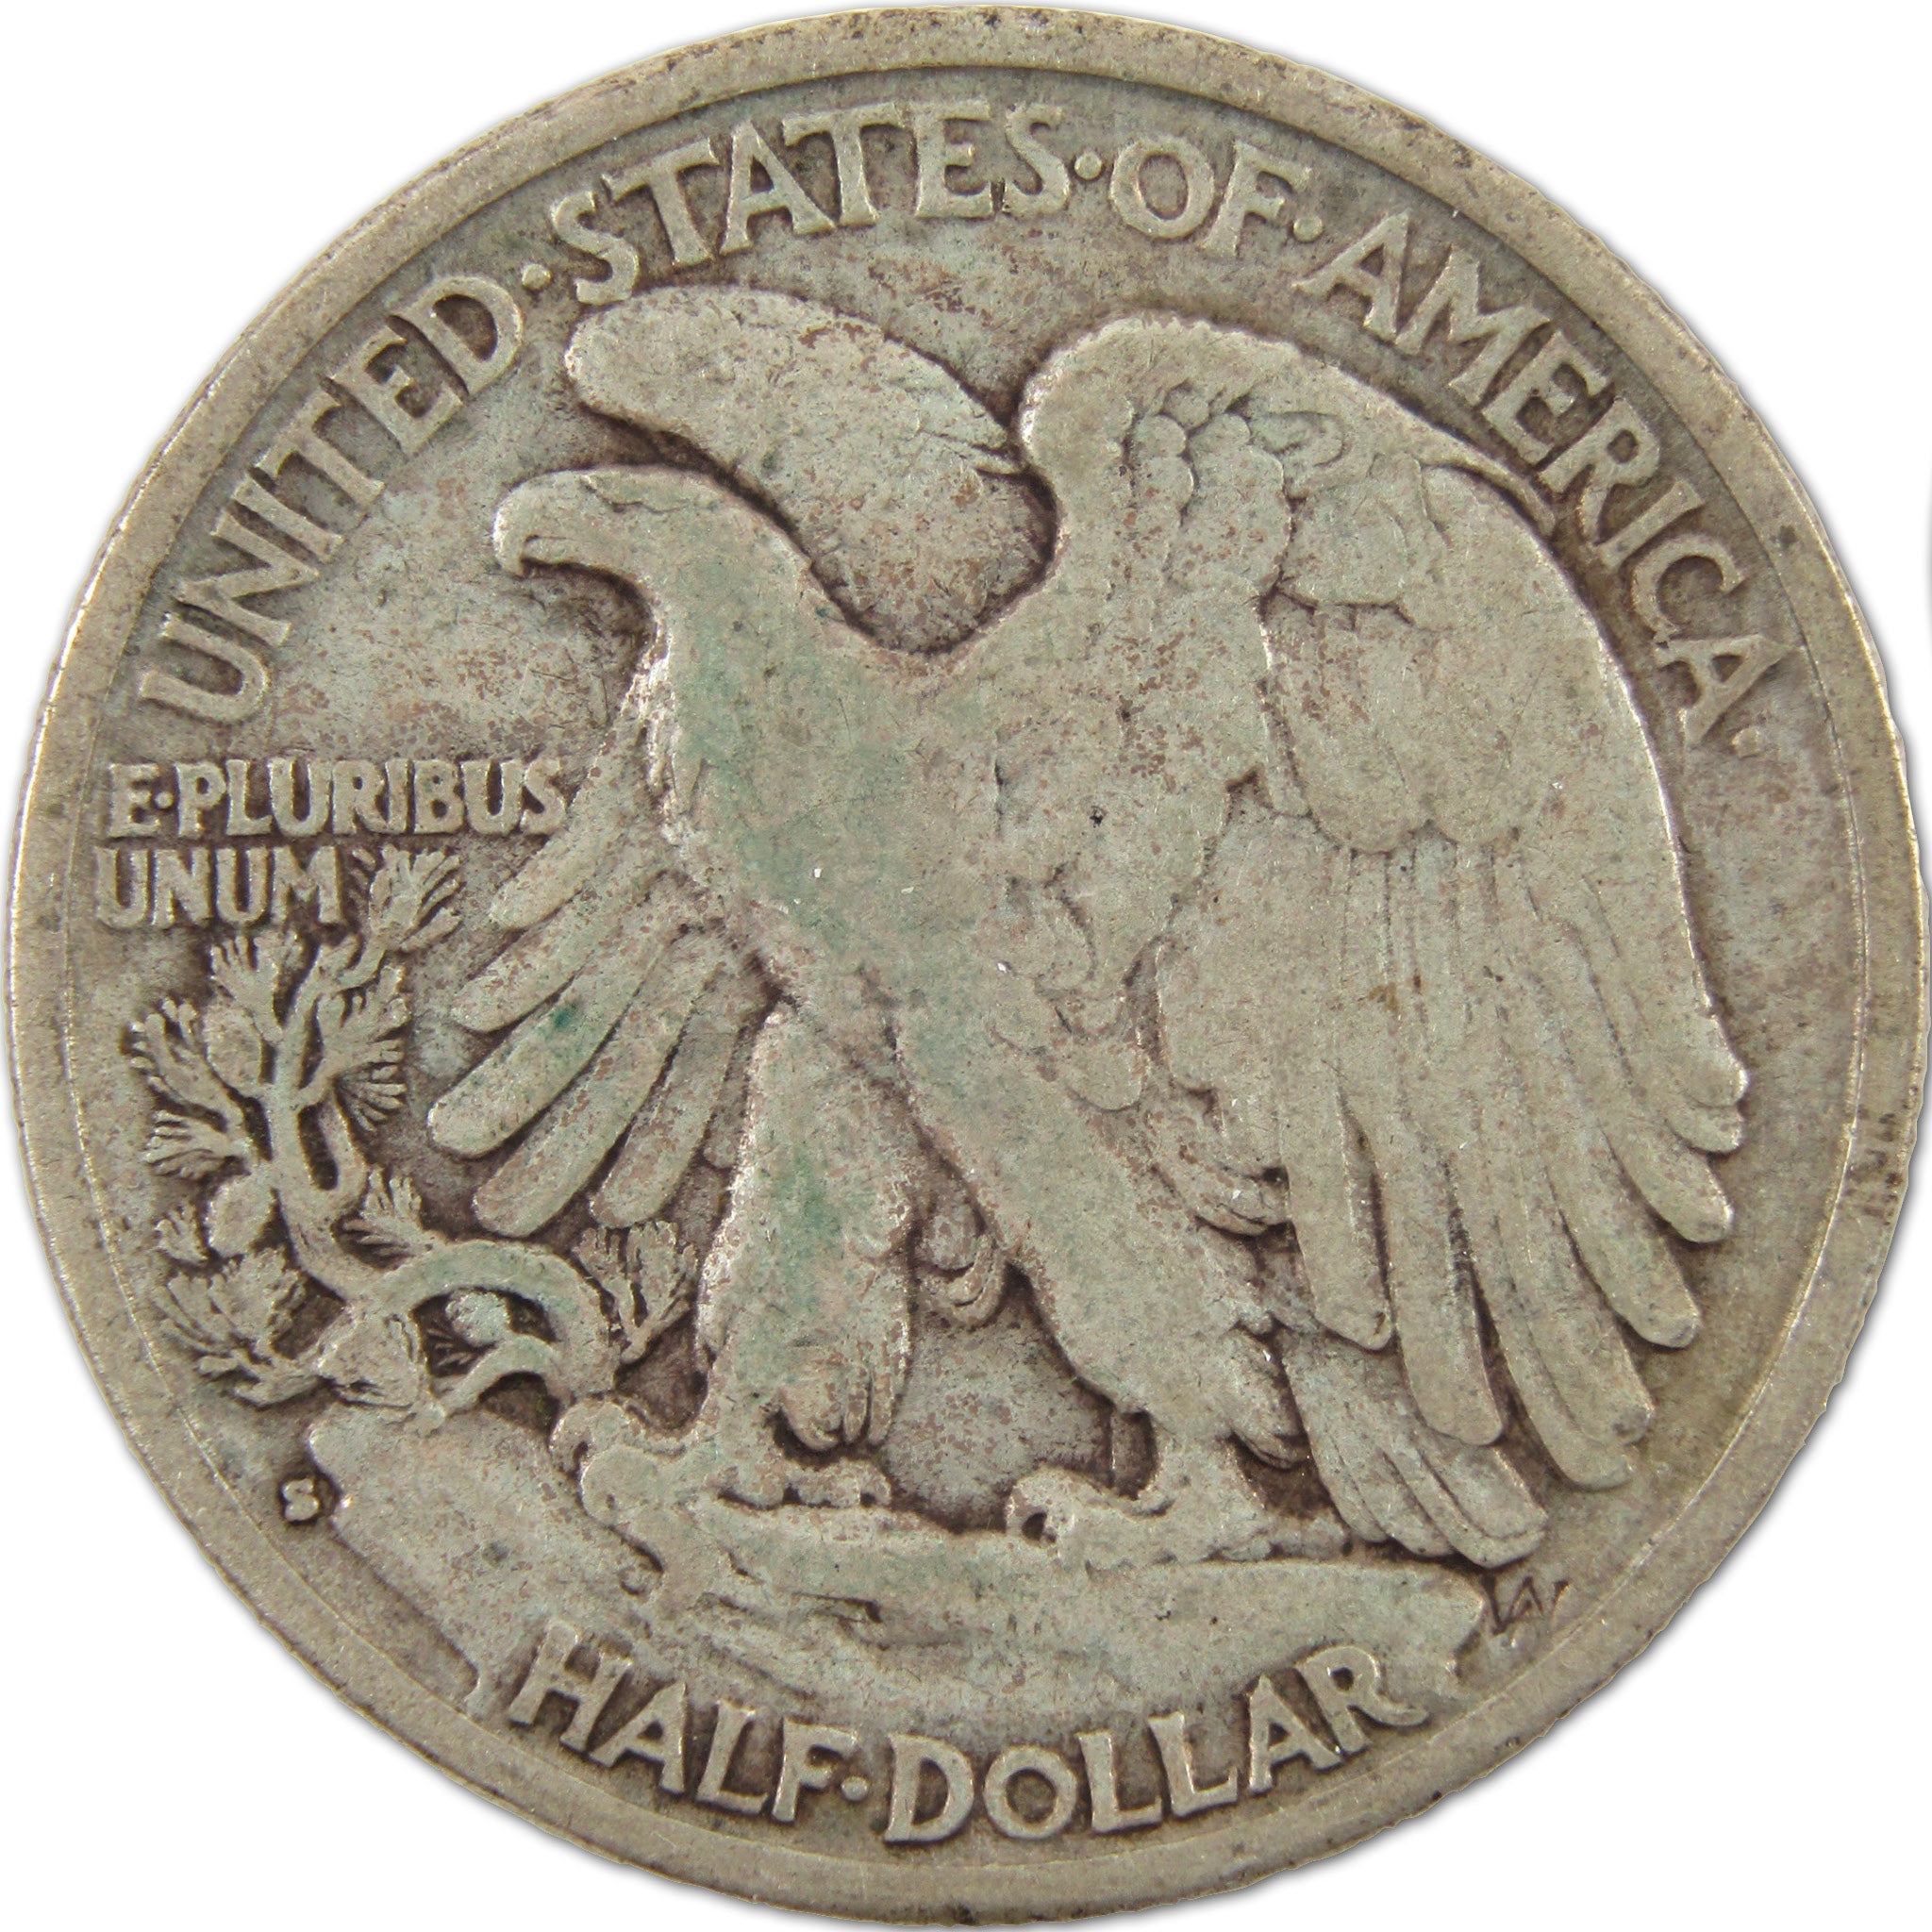 1929 S Liberty Walking Half Dollar VF Very Fine Silver 50c SKU:I10409